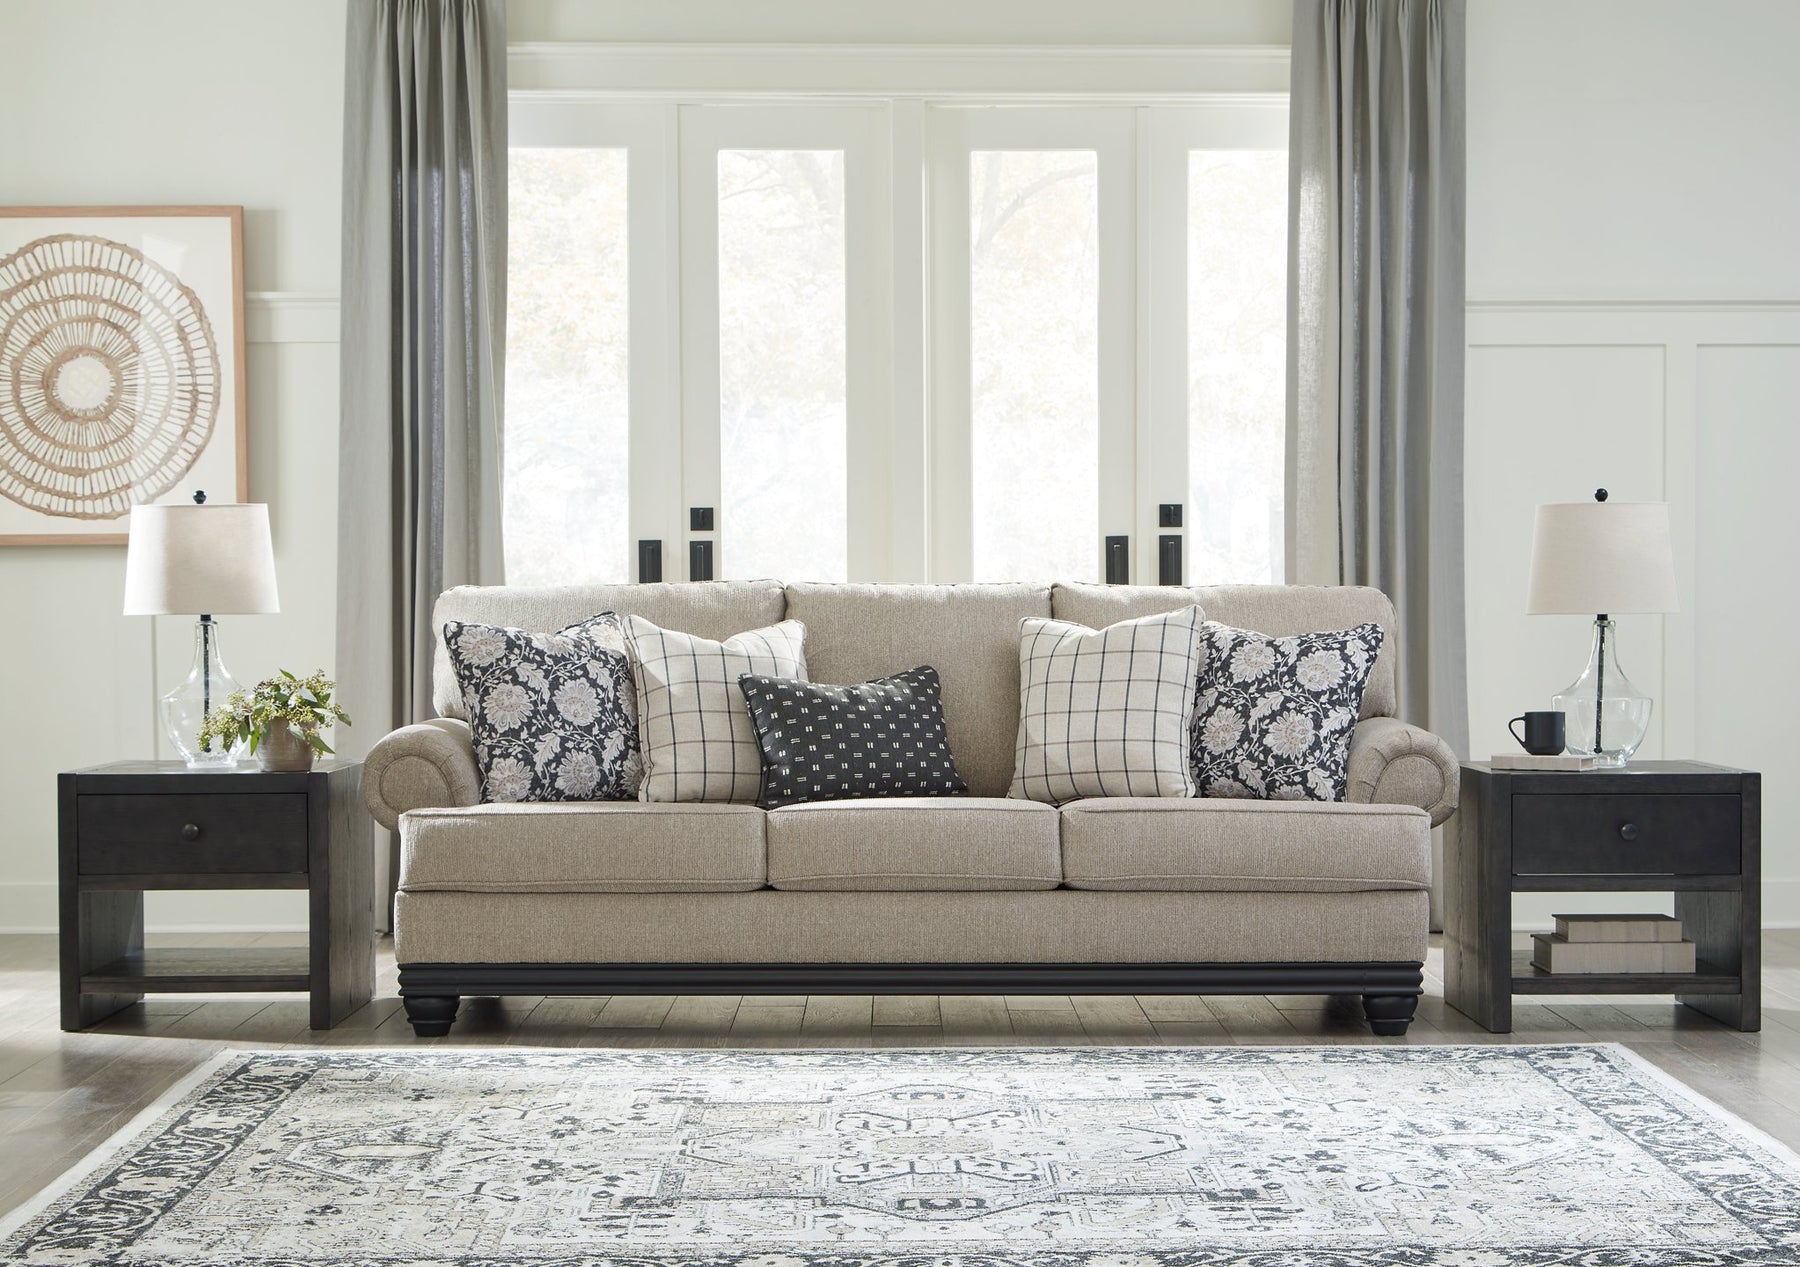 Elbiani Living Room Set - Half Price Furniture